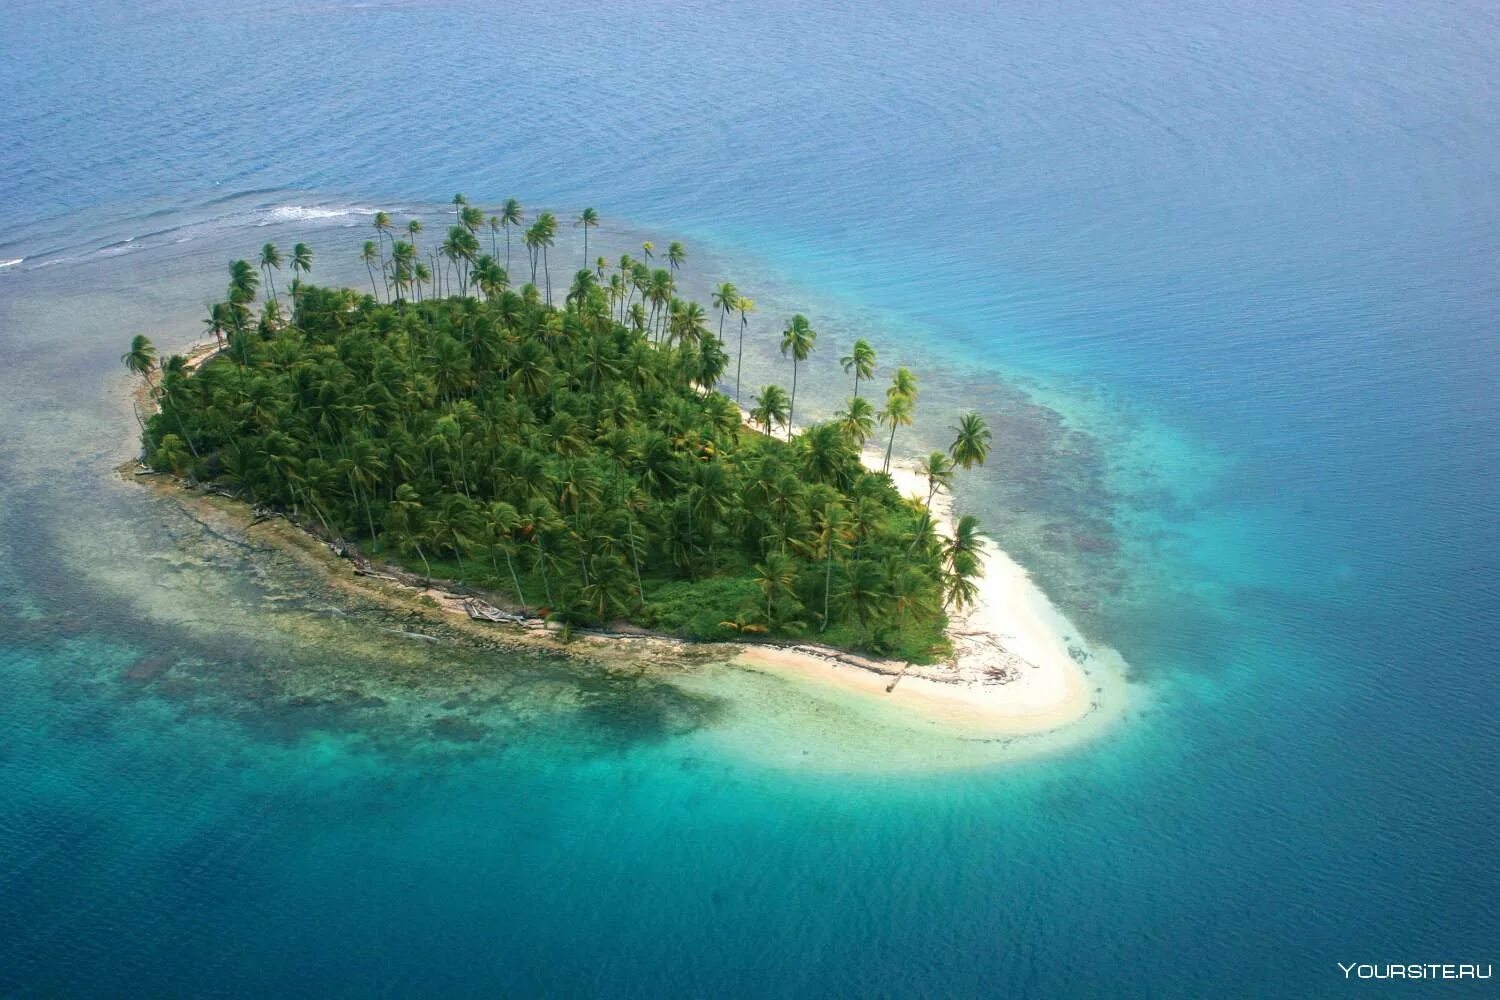 O island. Острова Сан-Блас, Панама. Архипелаг Сан-Блас. San Blas Islands Панама. Острова Сан-Блас, Панама фото.